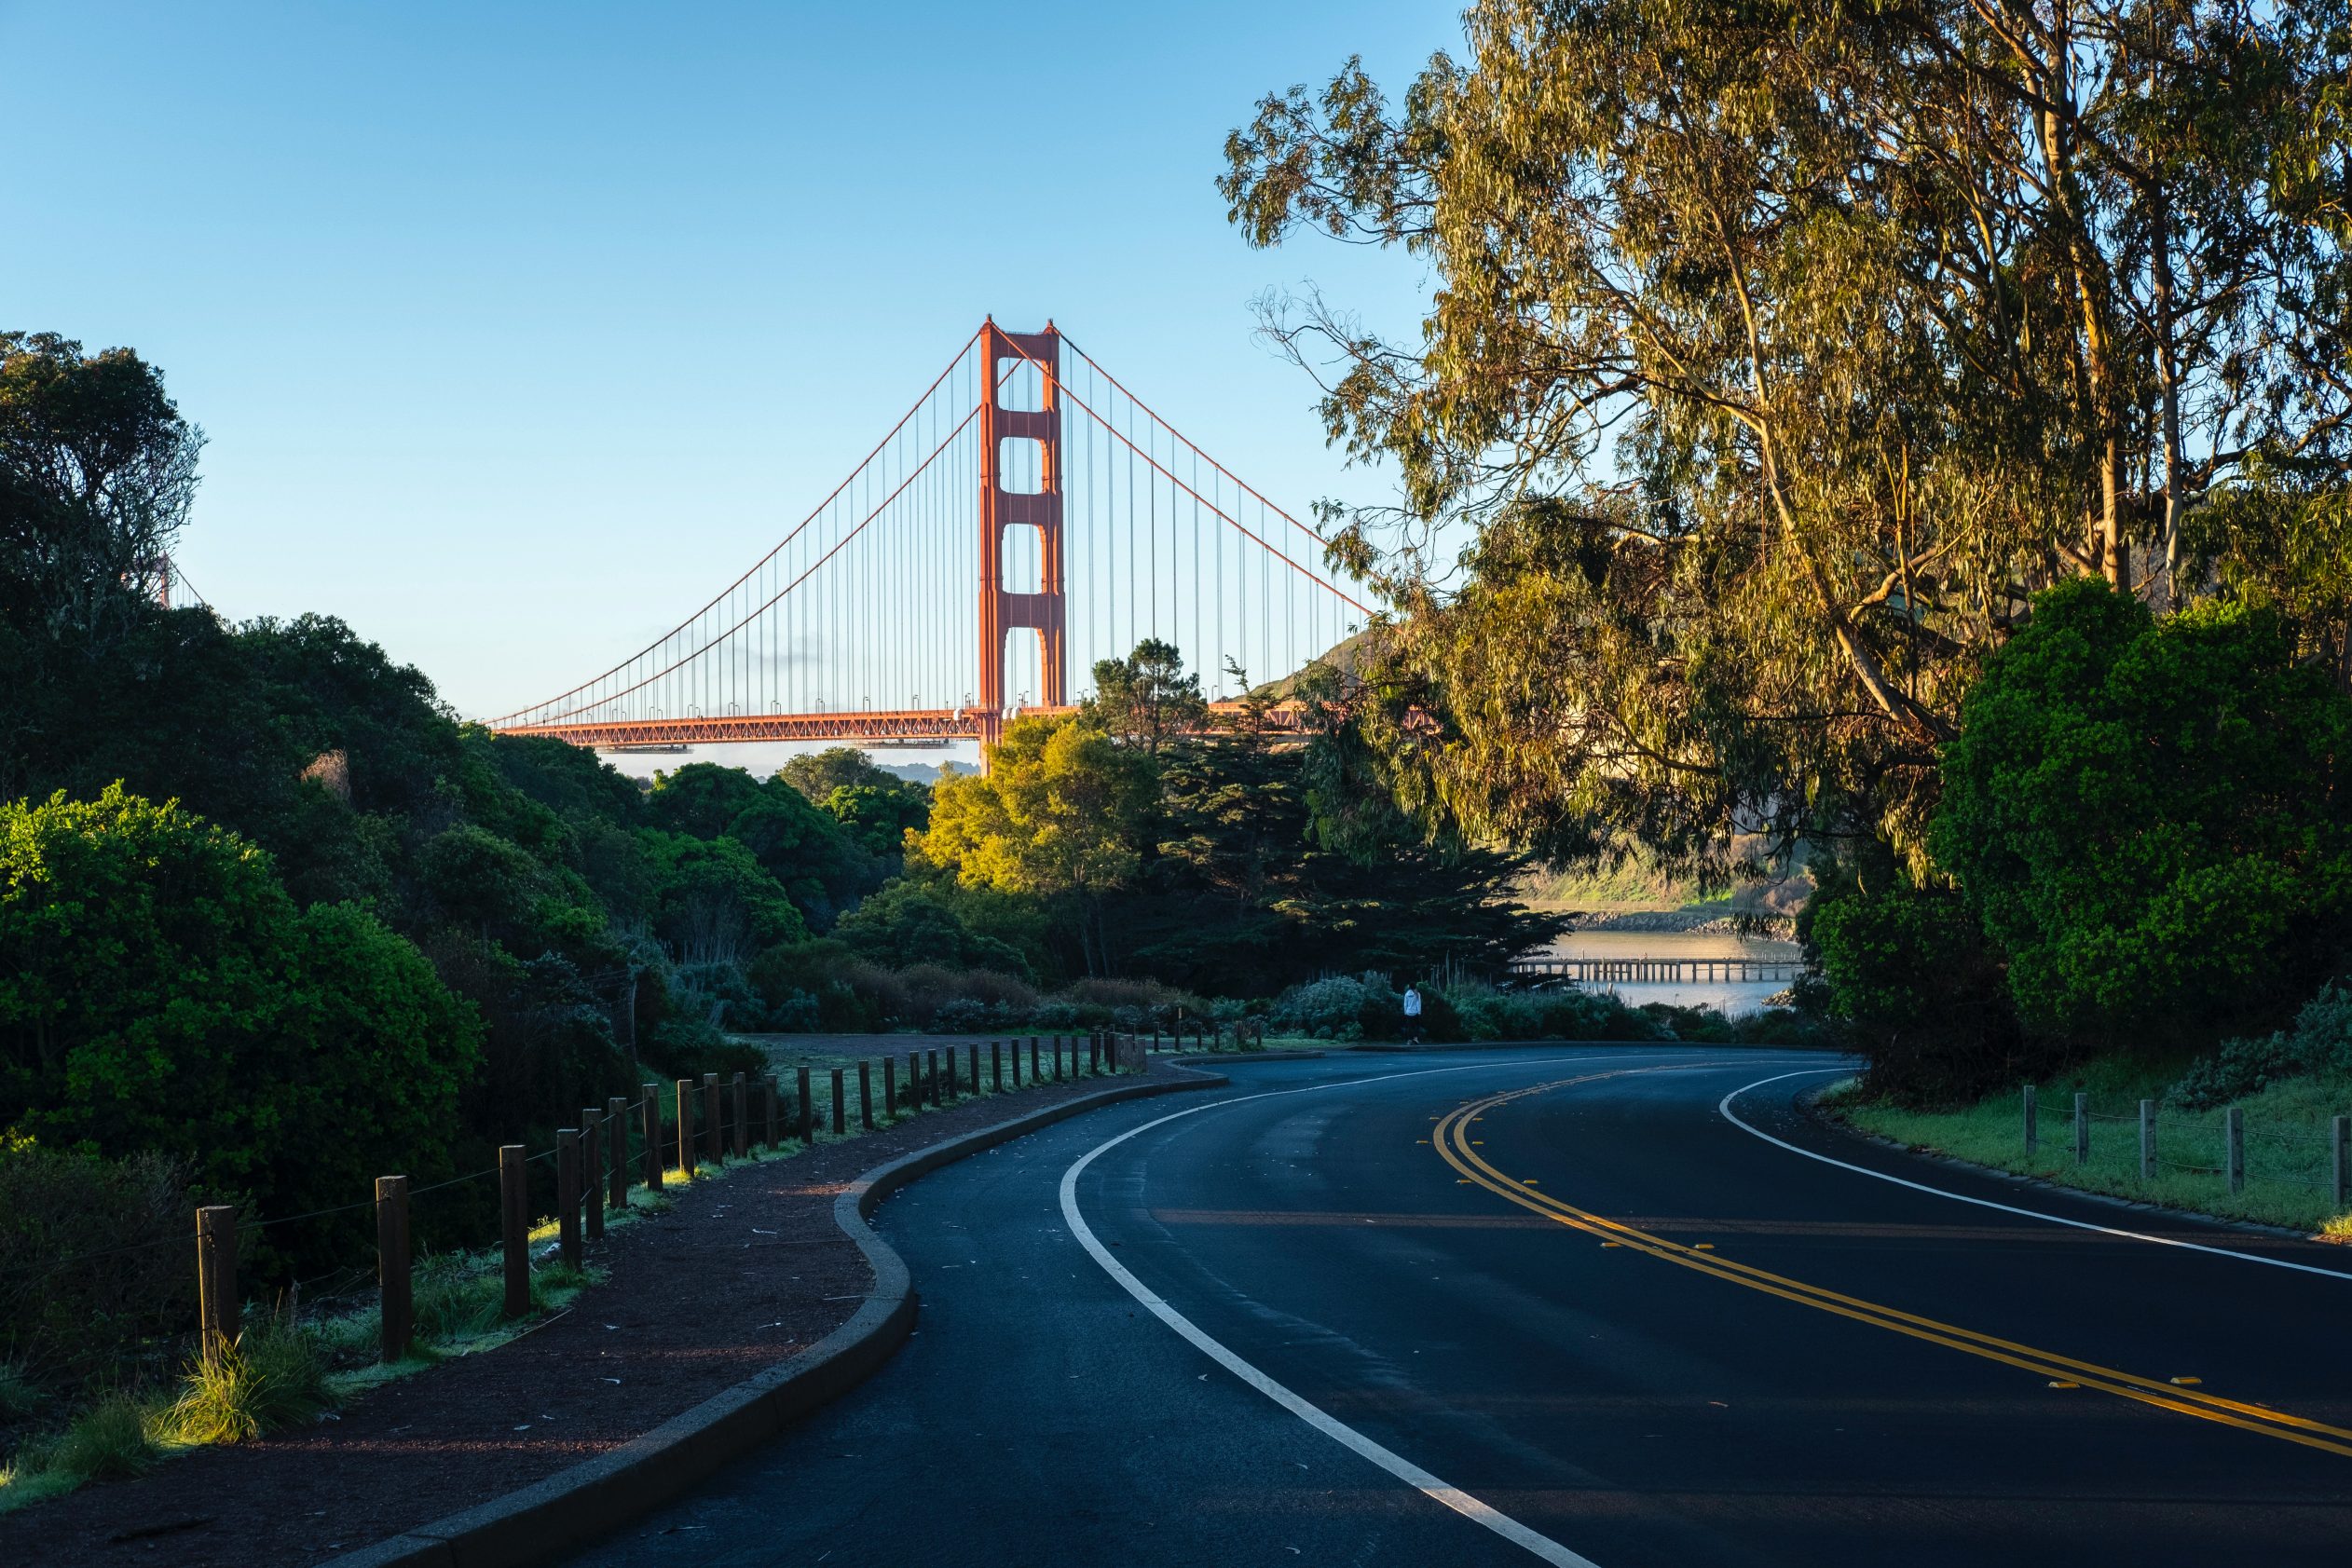 View of Golden Gate Bridge through trees